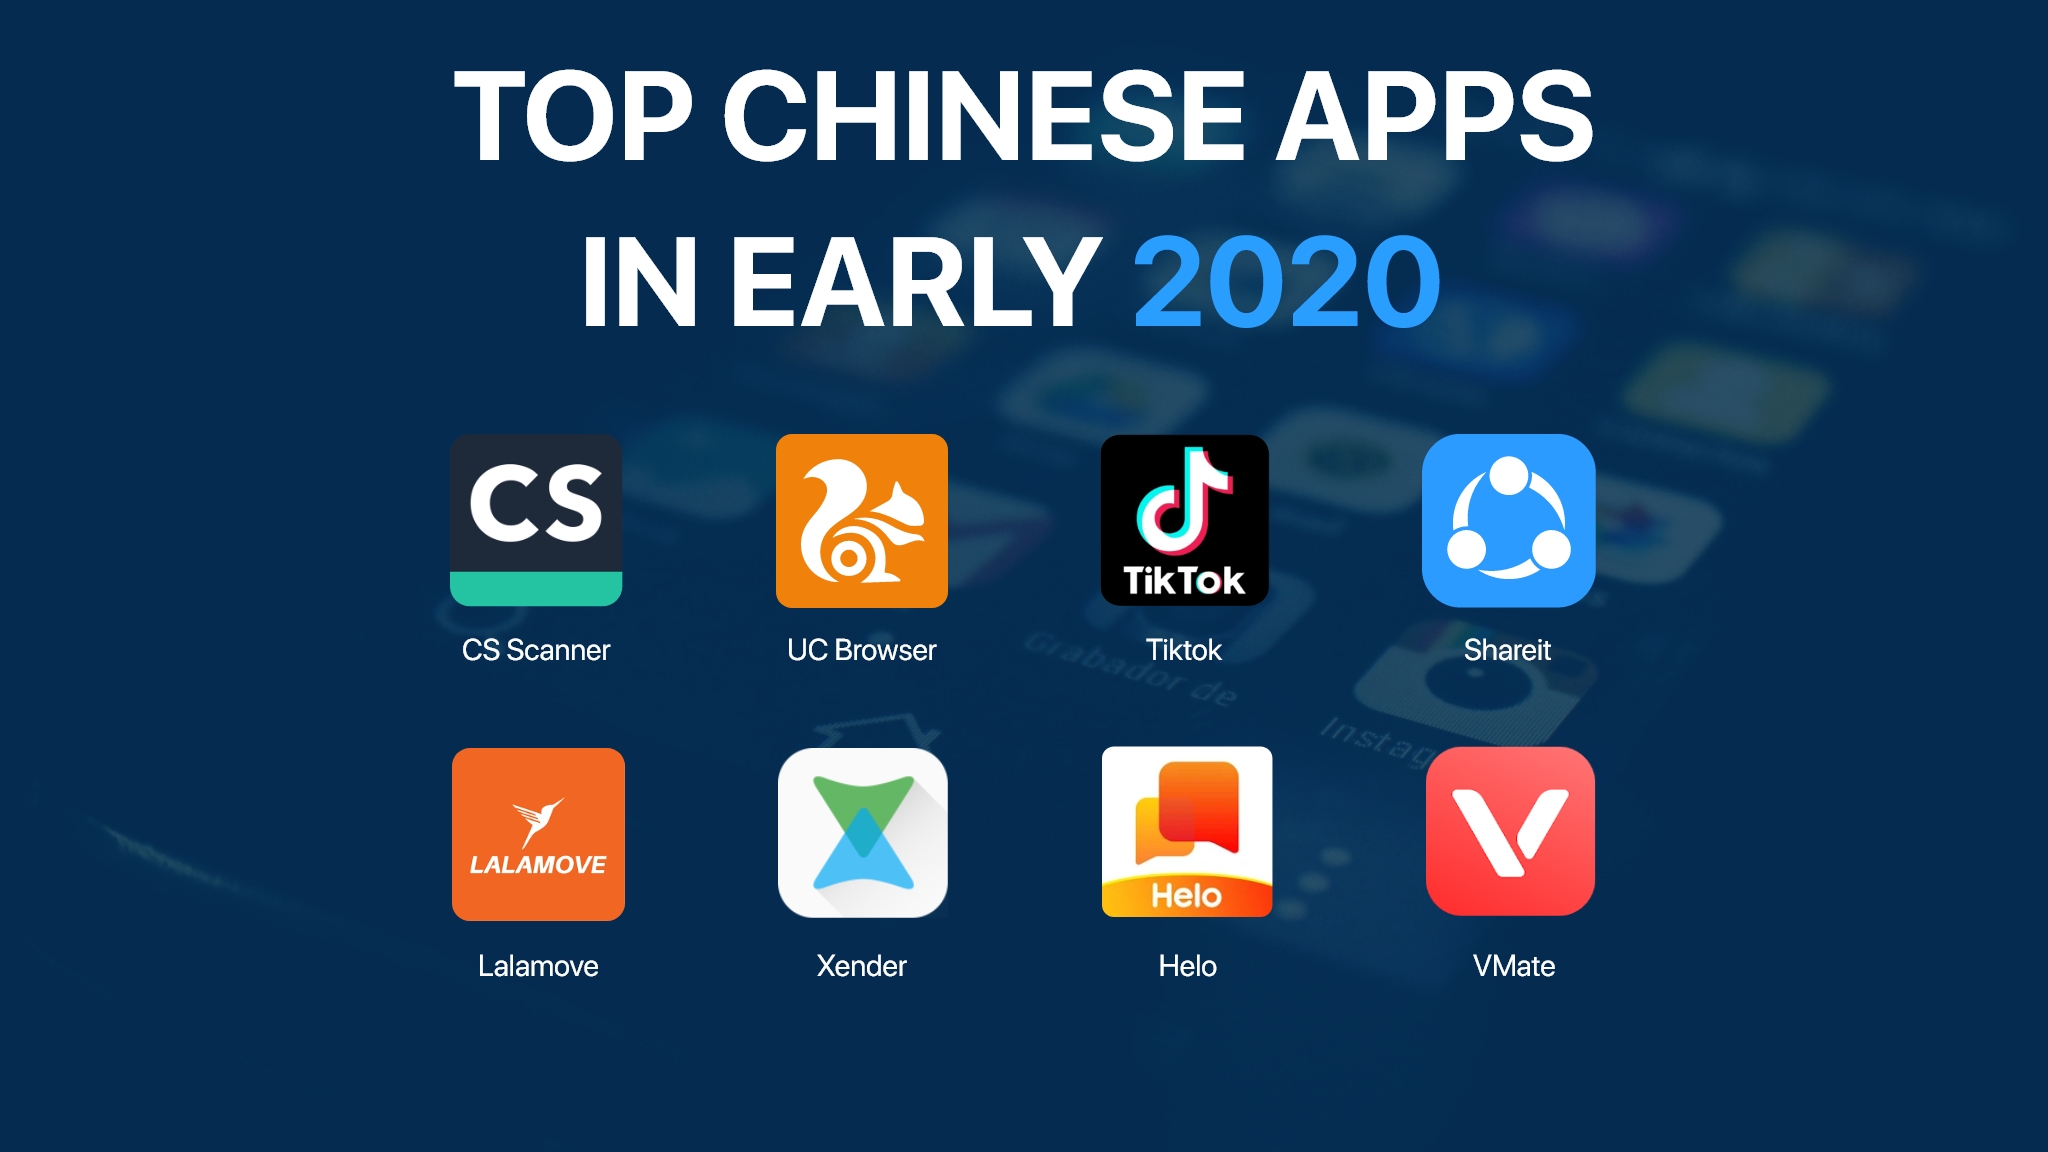 chinese app ban